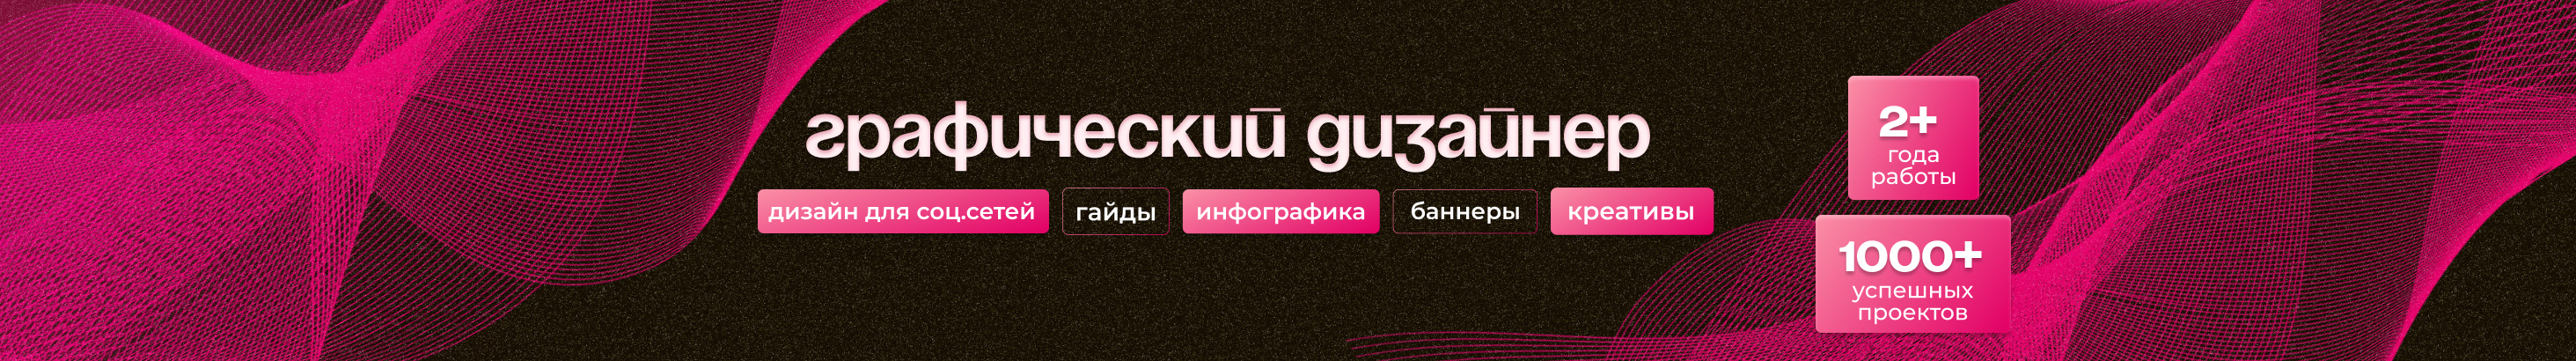 Profil-Banner von Aleksandra Designer